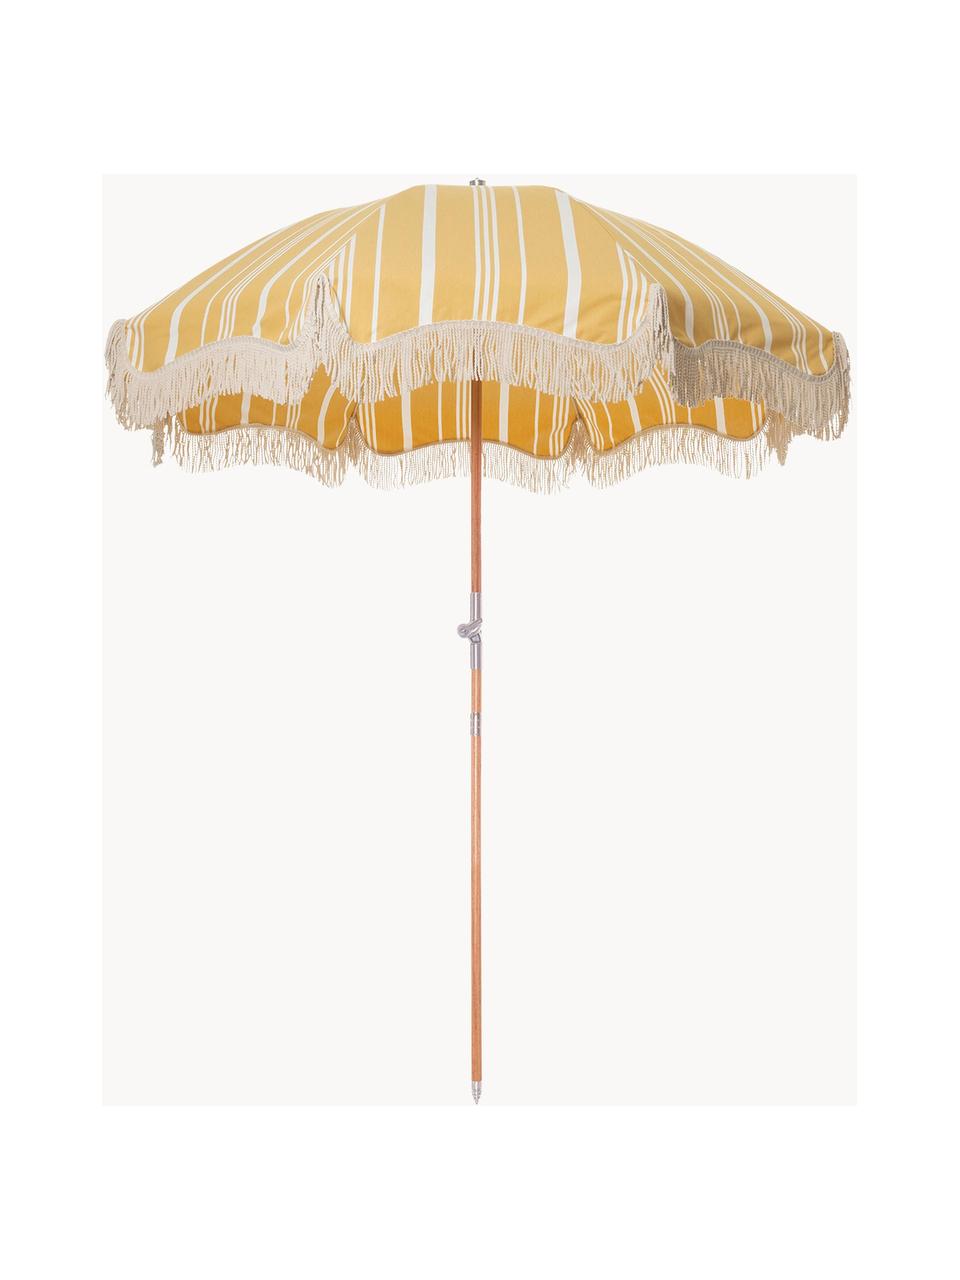 Gestreepte Parasol Retro met franjes in geel-wit, knikbaar, Frame: gelamineerd hout, Franjes: katoen, Geel, gebroken wit, Ø 180 x H 230 cm